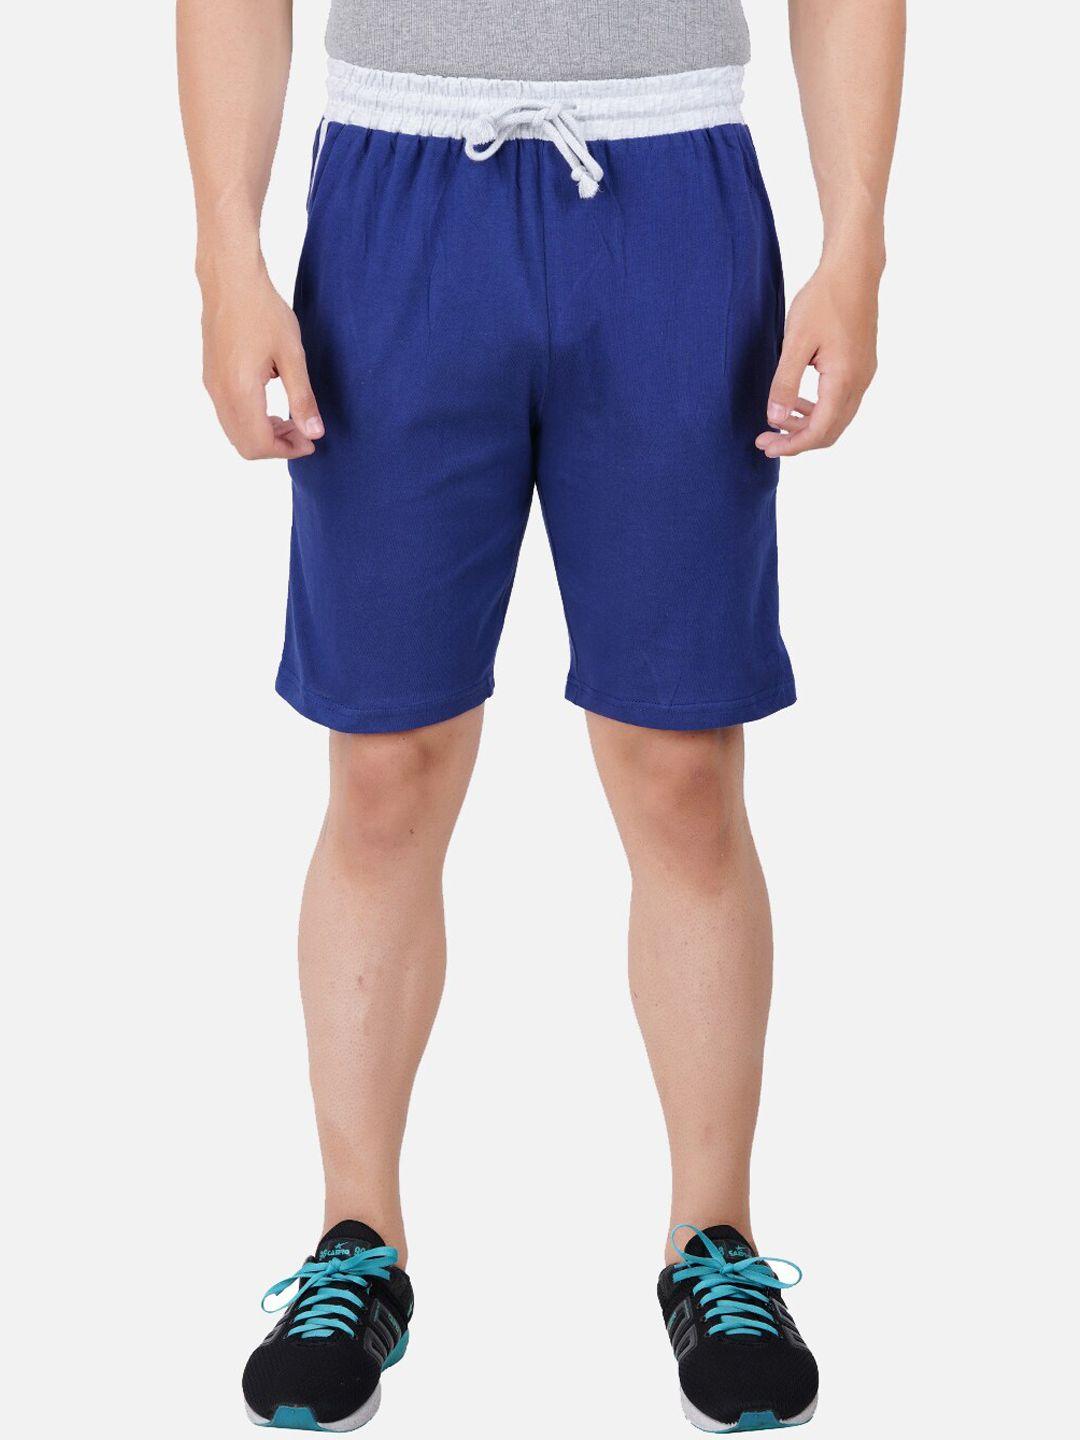 pride apparel men navy blue cotton solid outdoor sports shorts